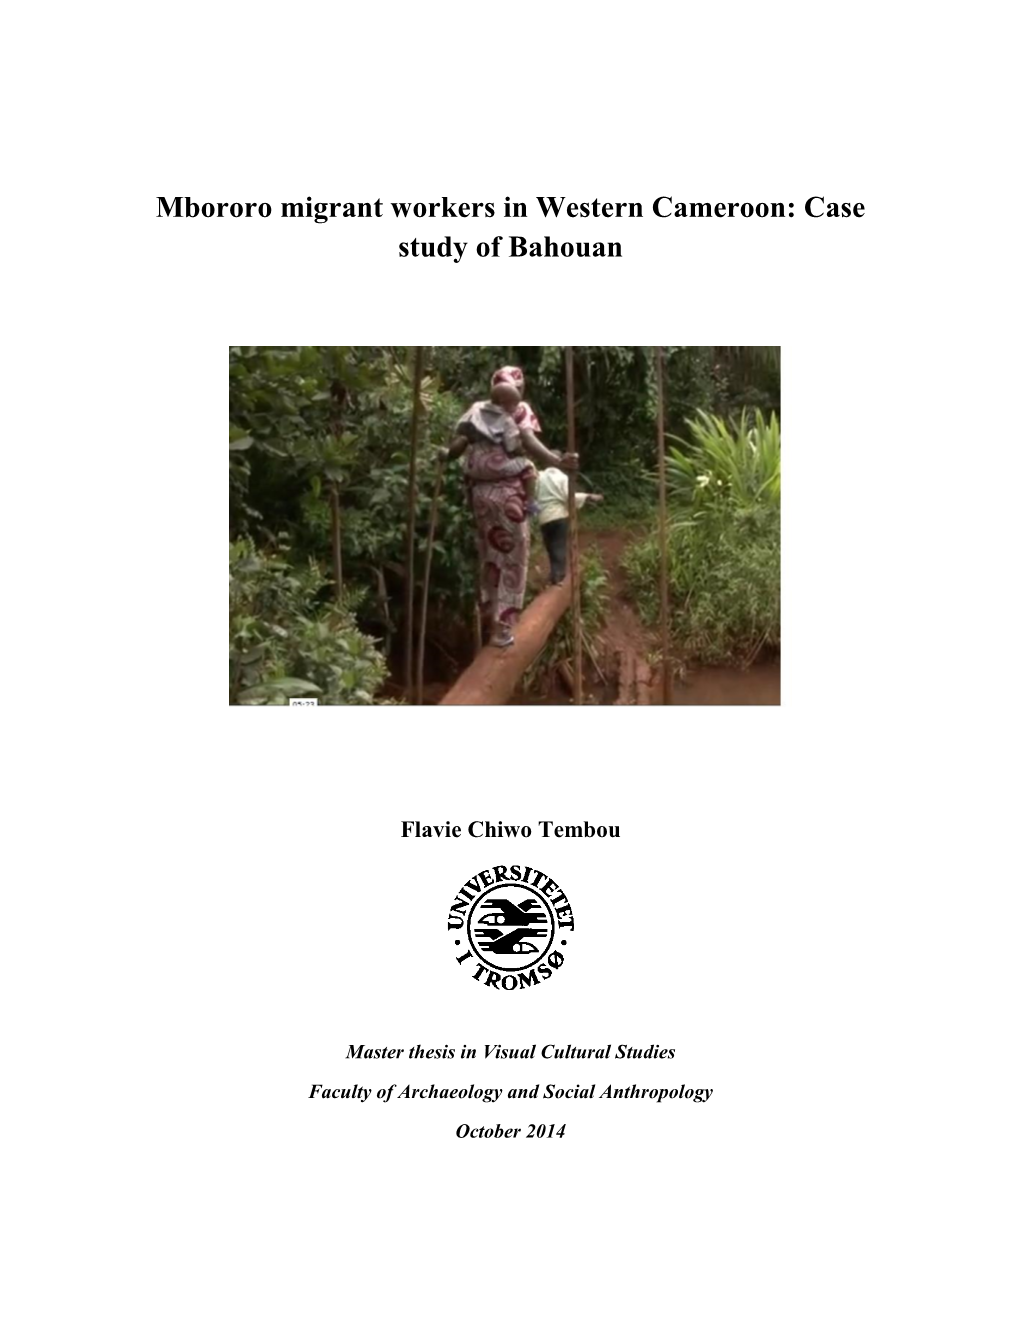 Mbororo Migrant Workers in Western Cameroon: Case Study of Bahouan